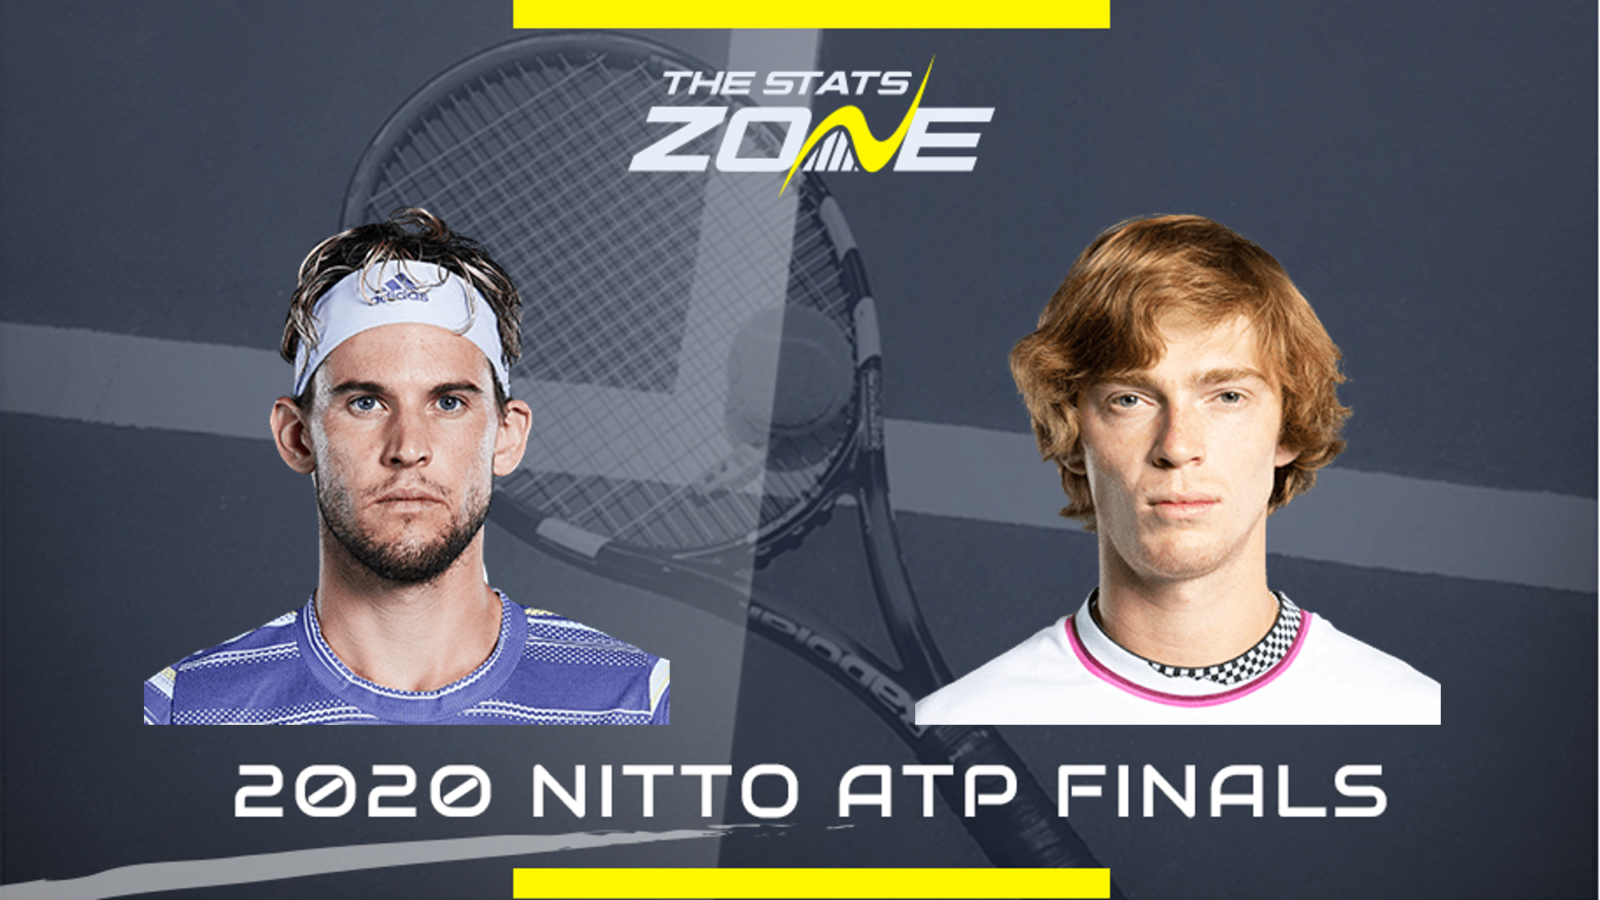 2020 Nitto ATP Finals